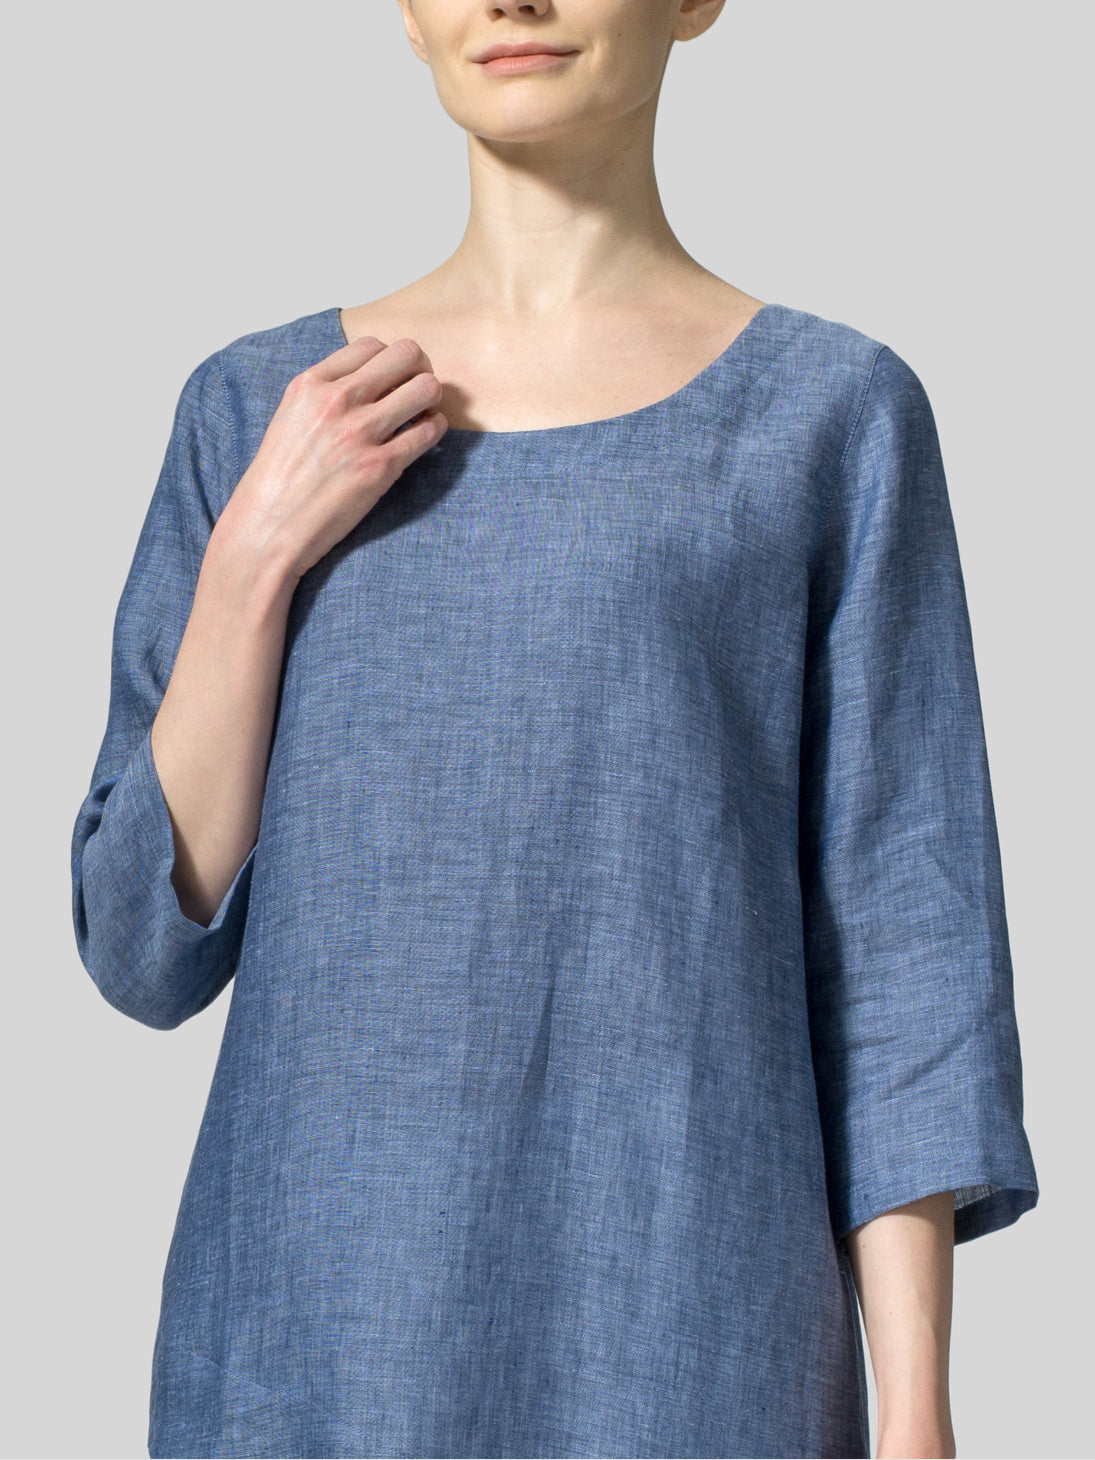 Womens Fashion Sky Blue Cotton Linen Asymmetric Long Shirt